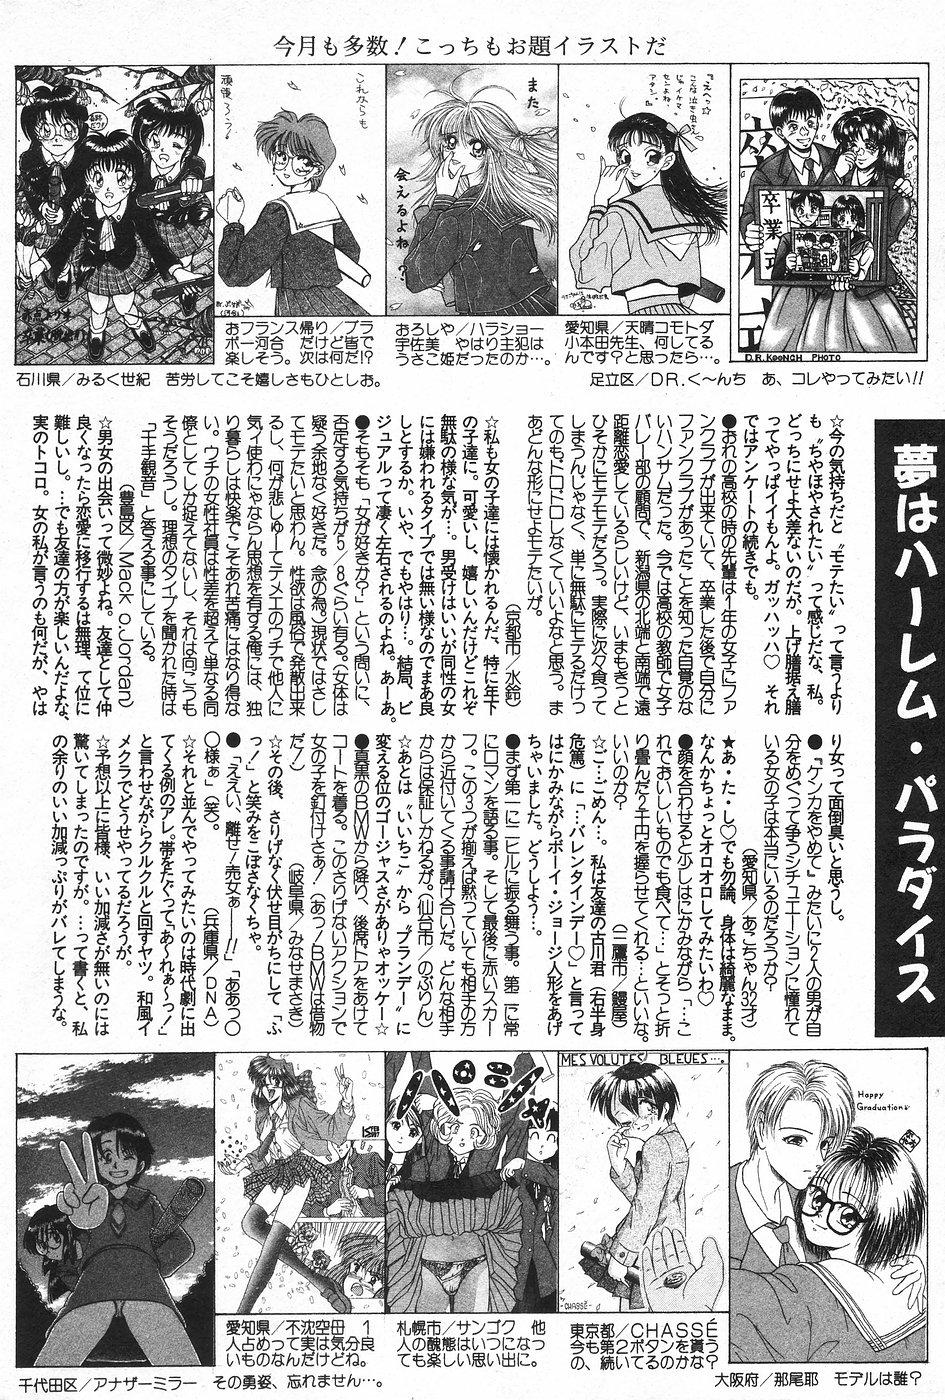 Manga Hotmilk 1997-04 158